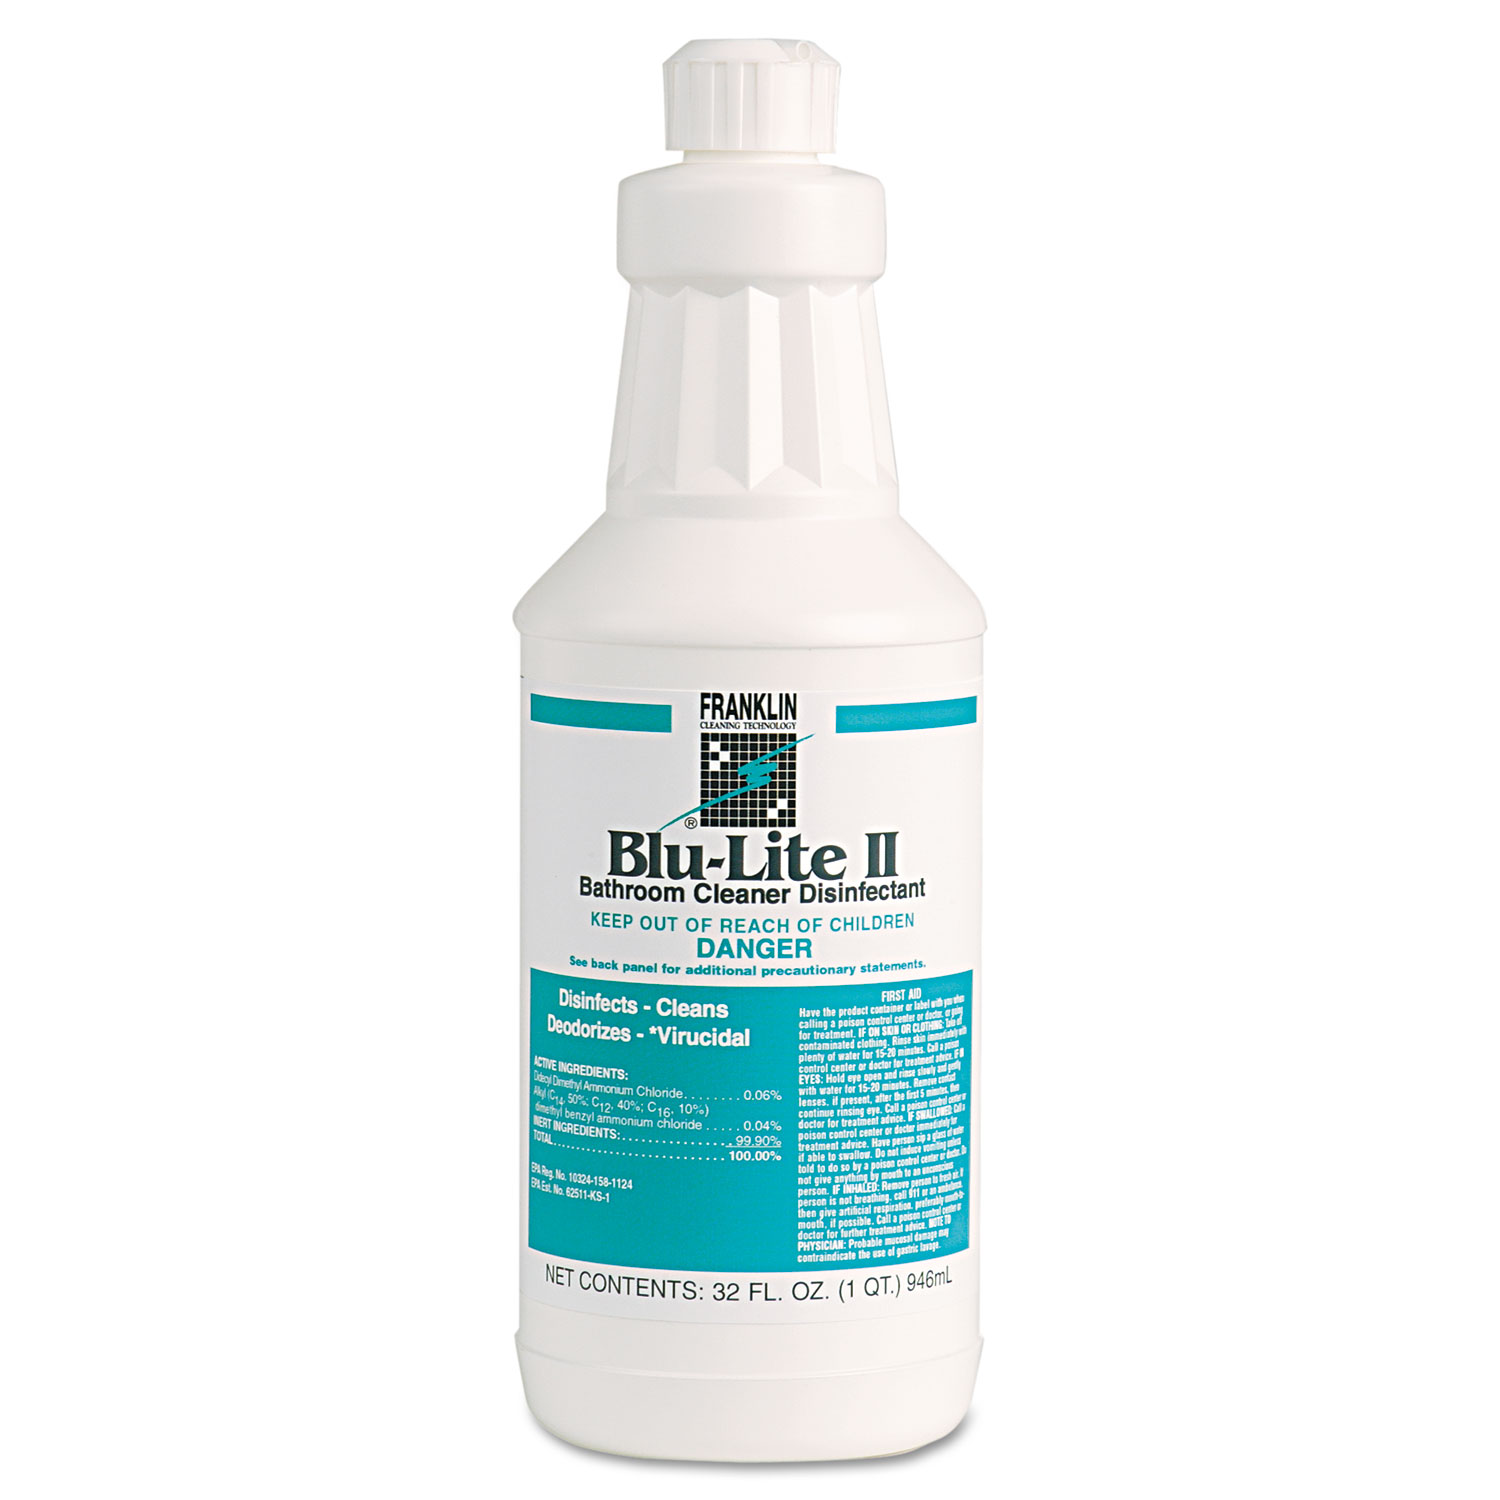 Blu-Lite II Bathroom Cleaner Disinfectant, 32oz Bottle, 12/CT